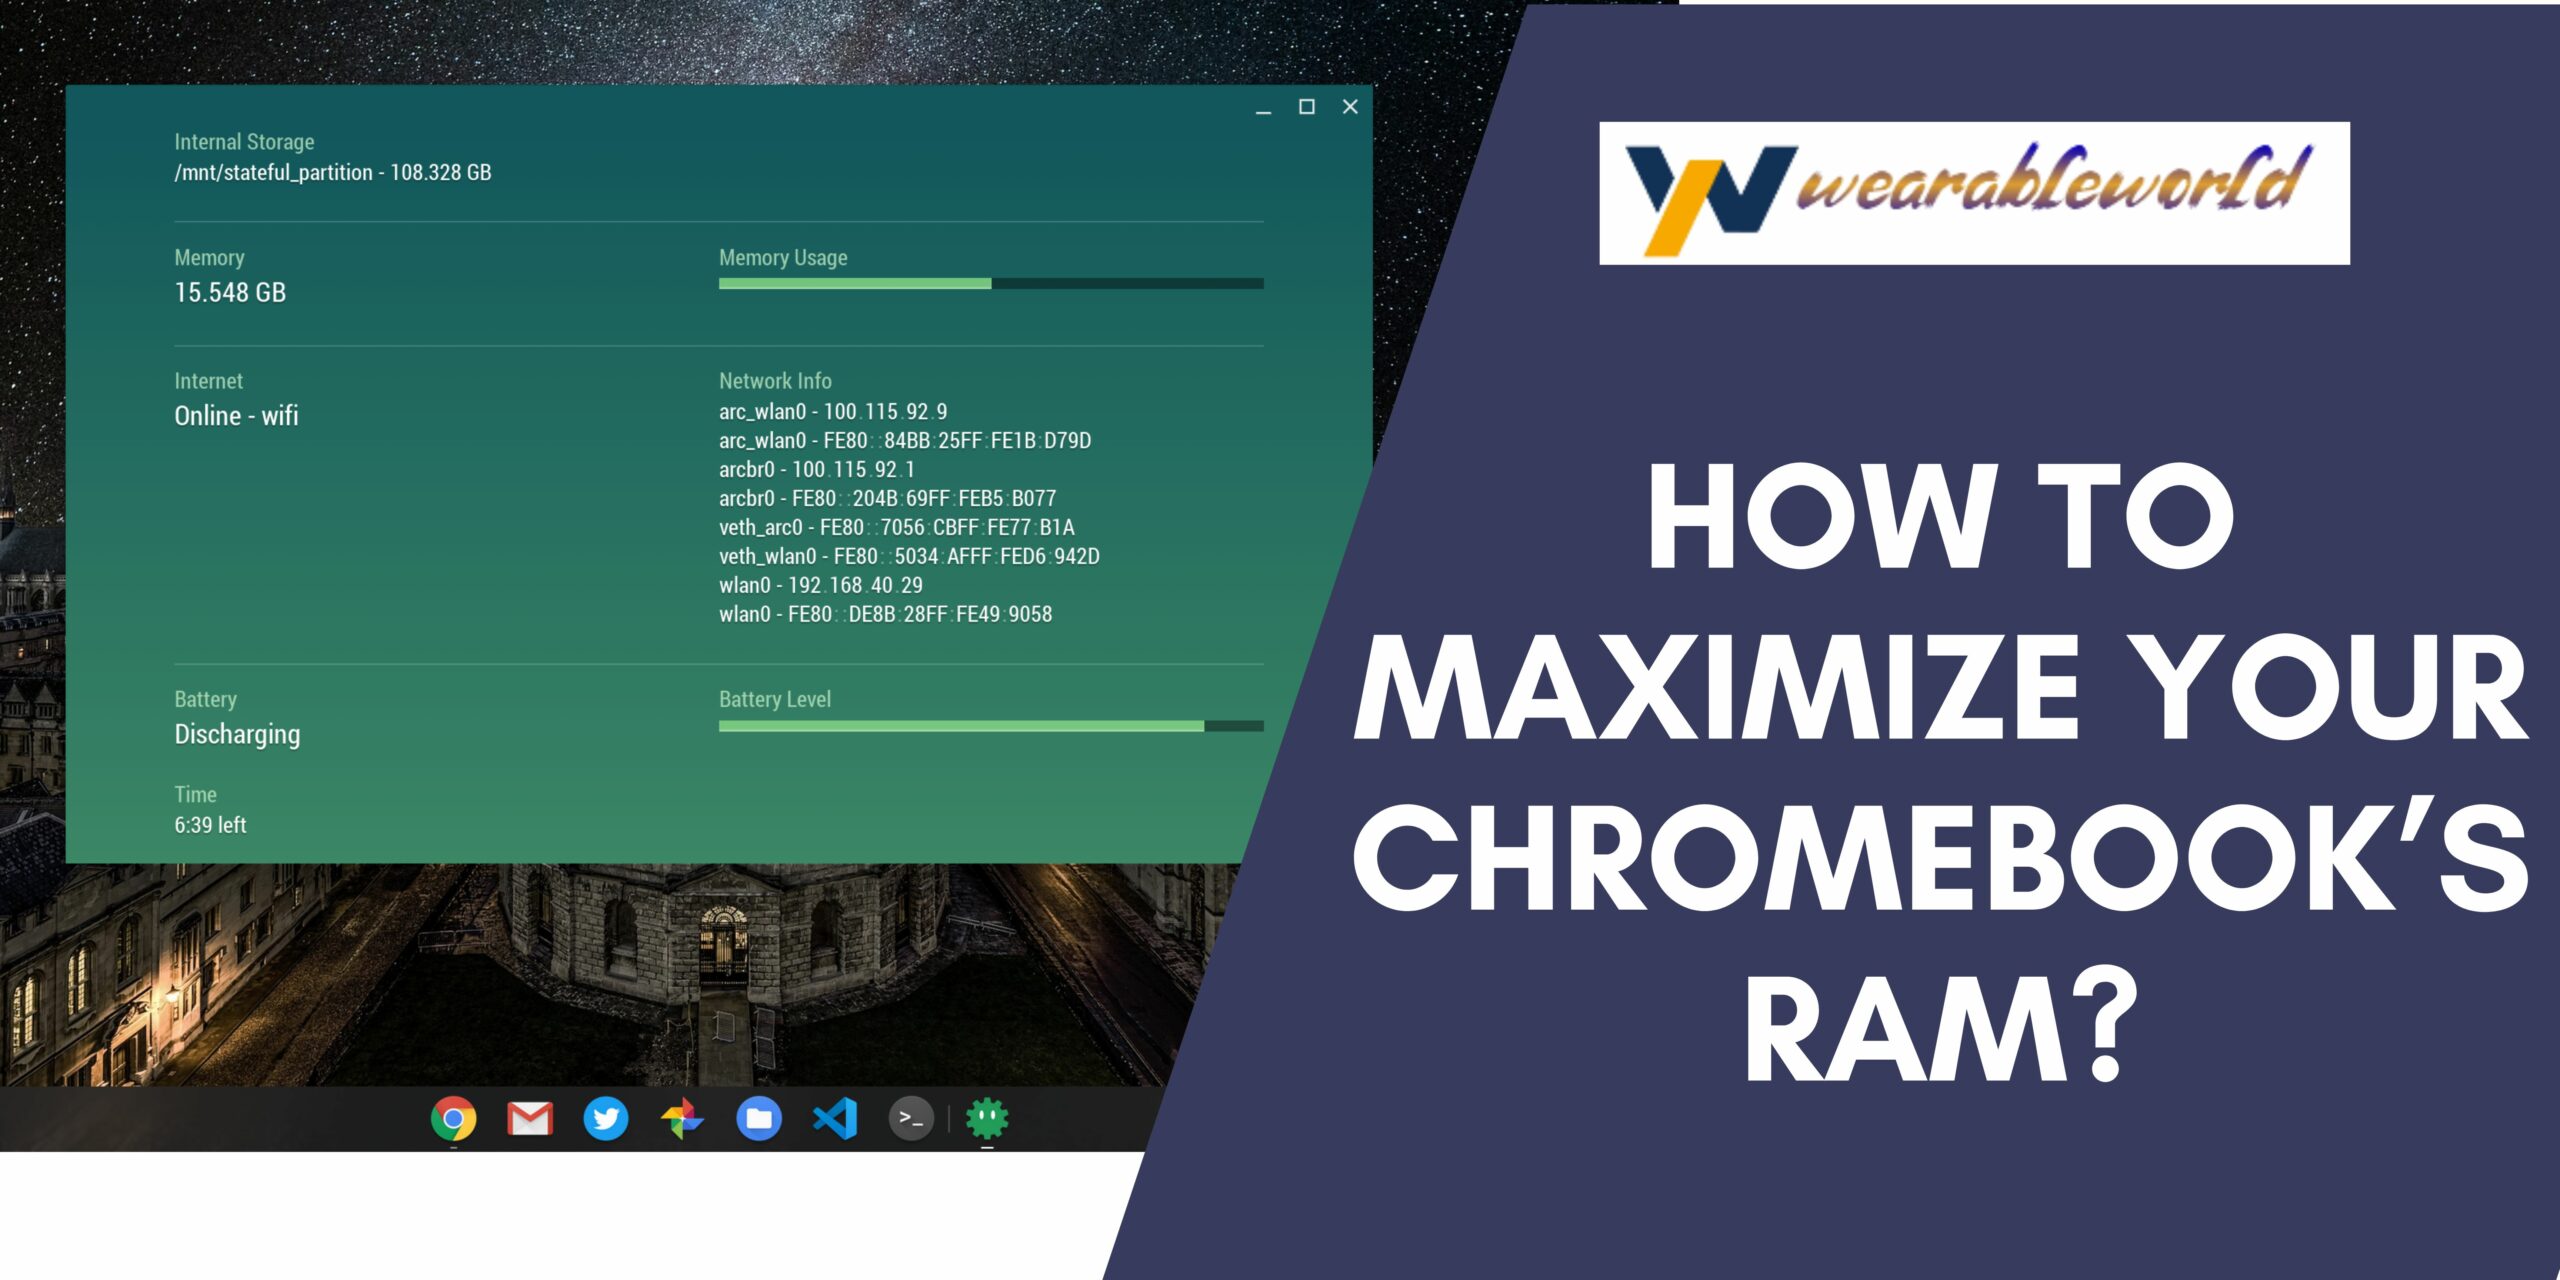 Maximize Your Chromebook’s RAM